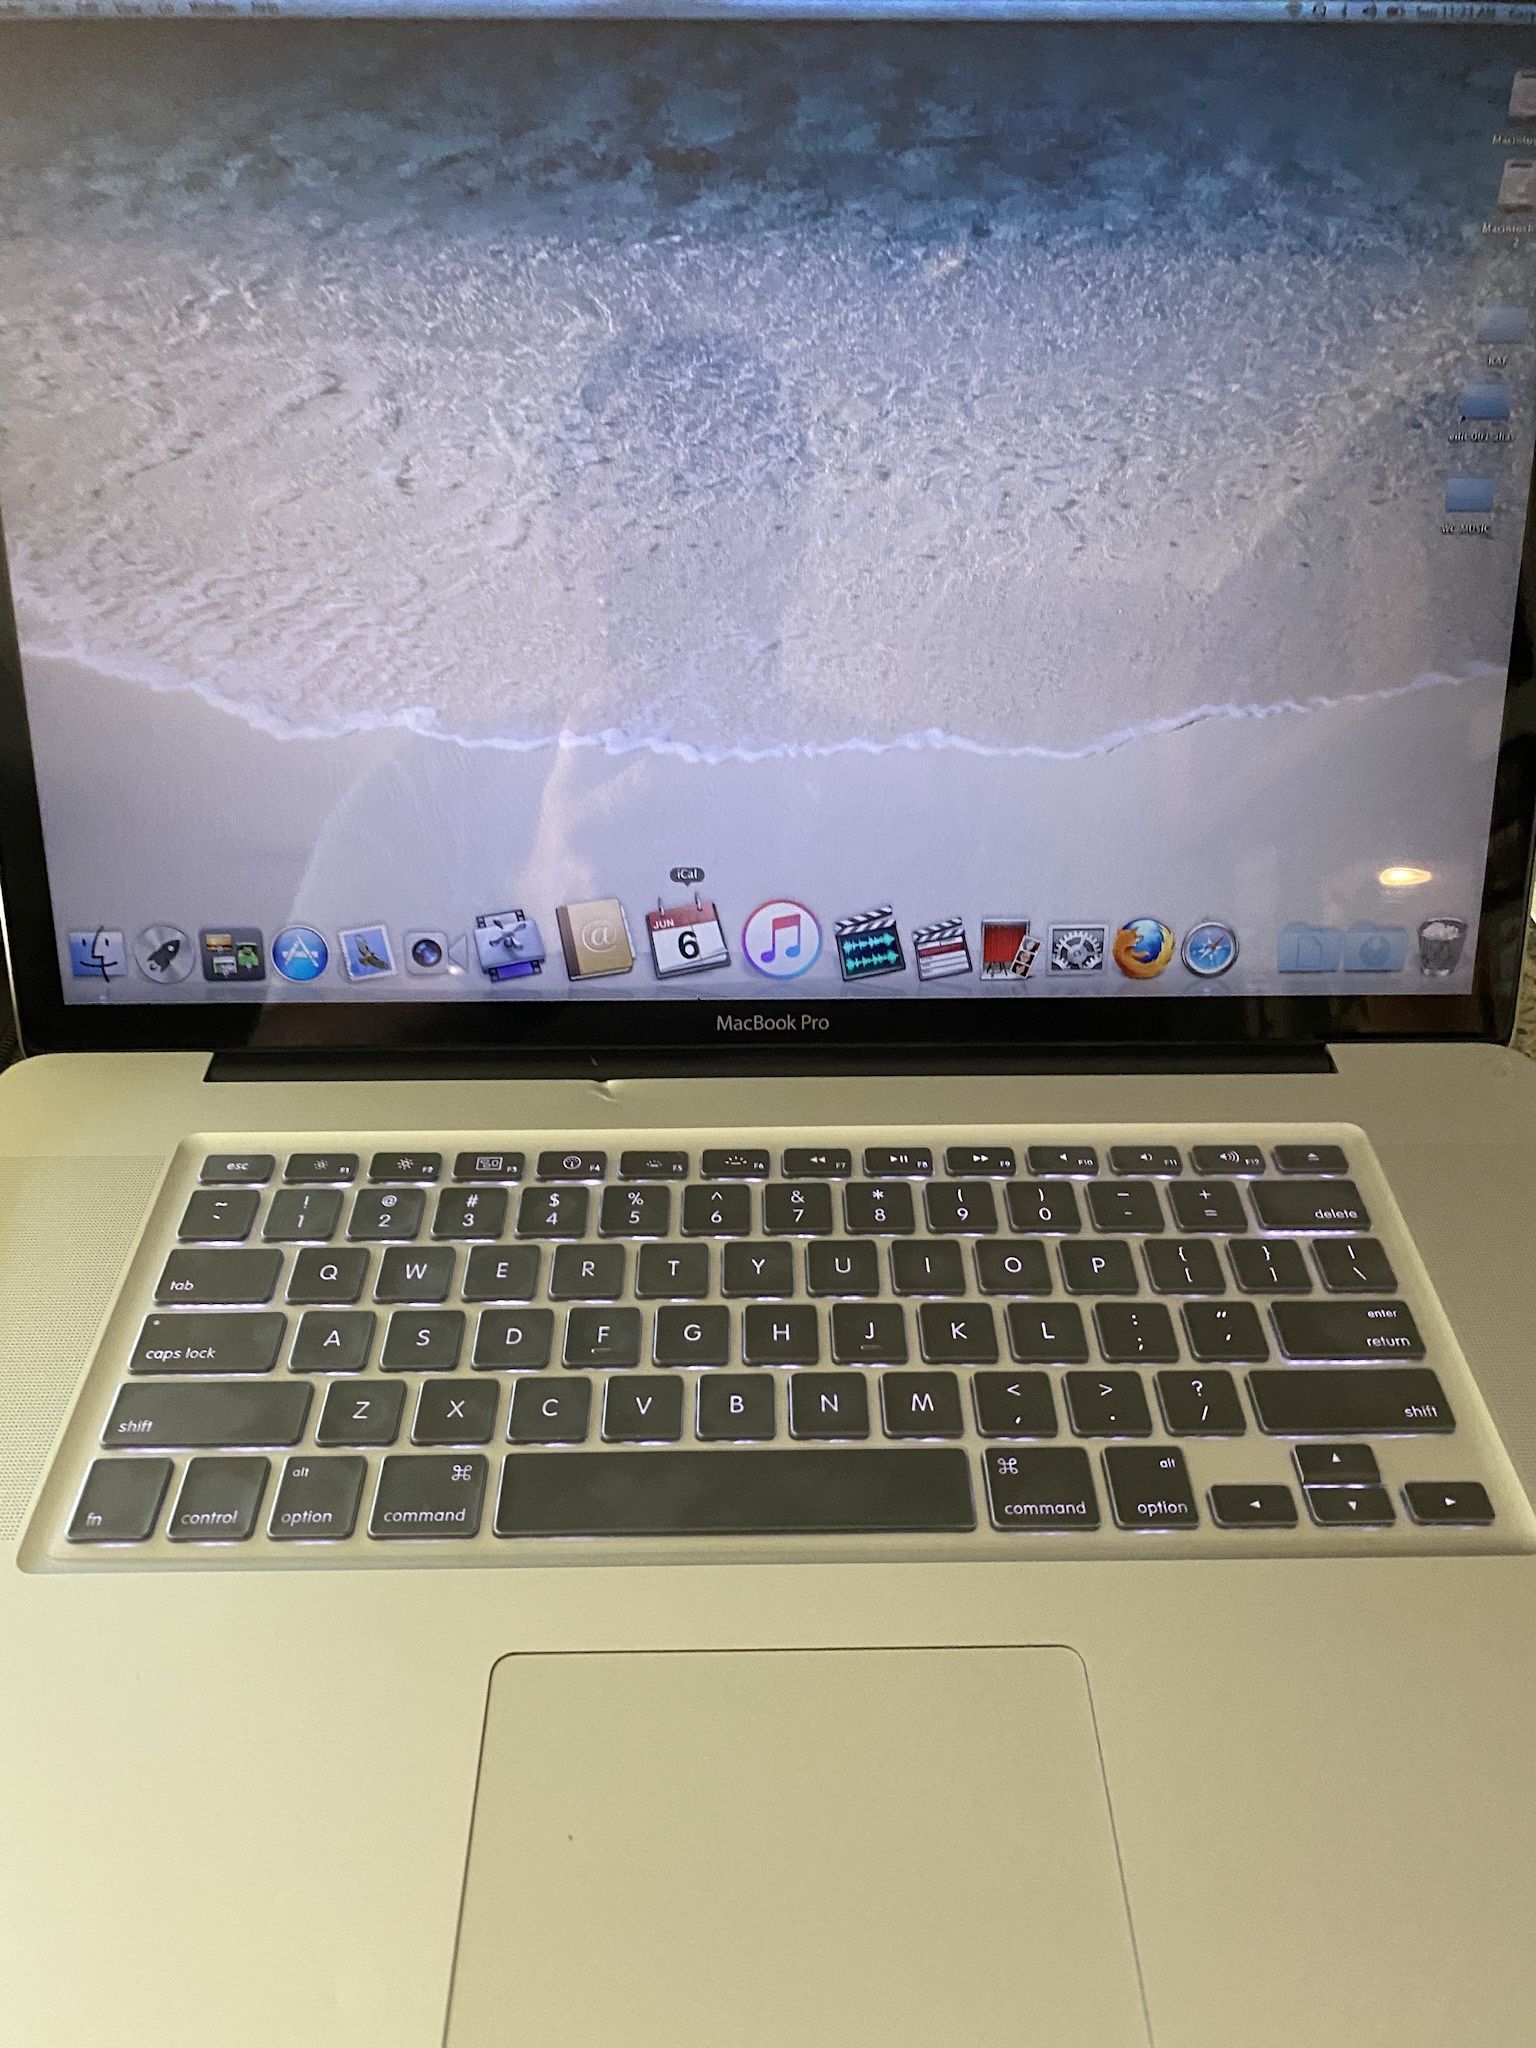 MacBook Pro 17 Dual Boot, Final Cut Pro System